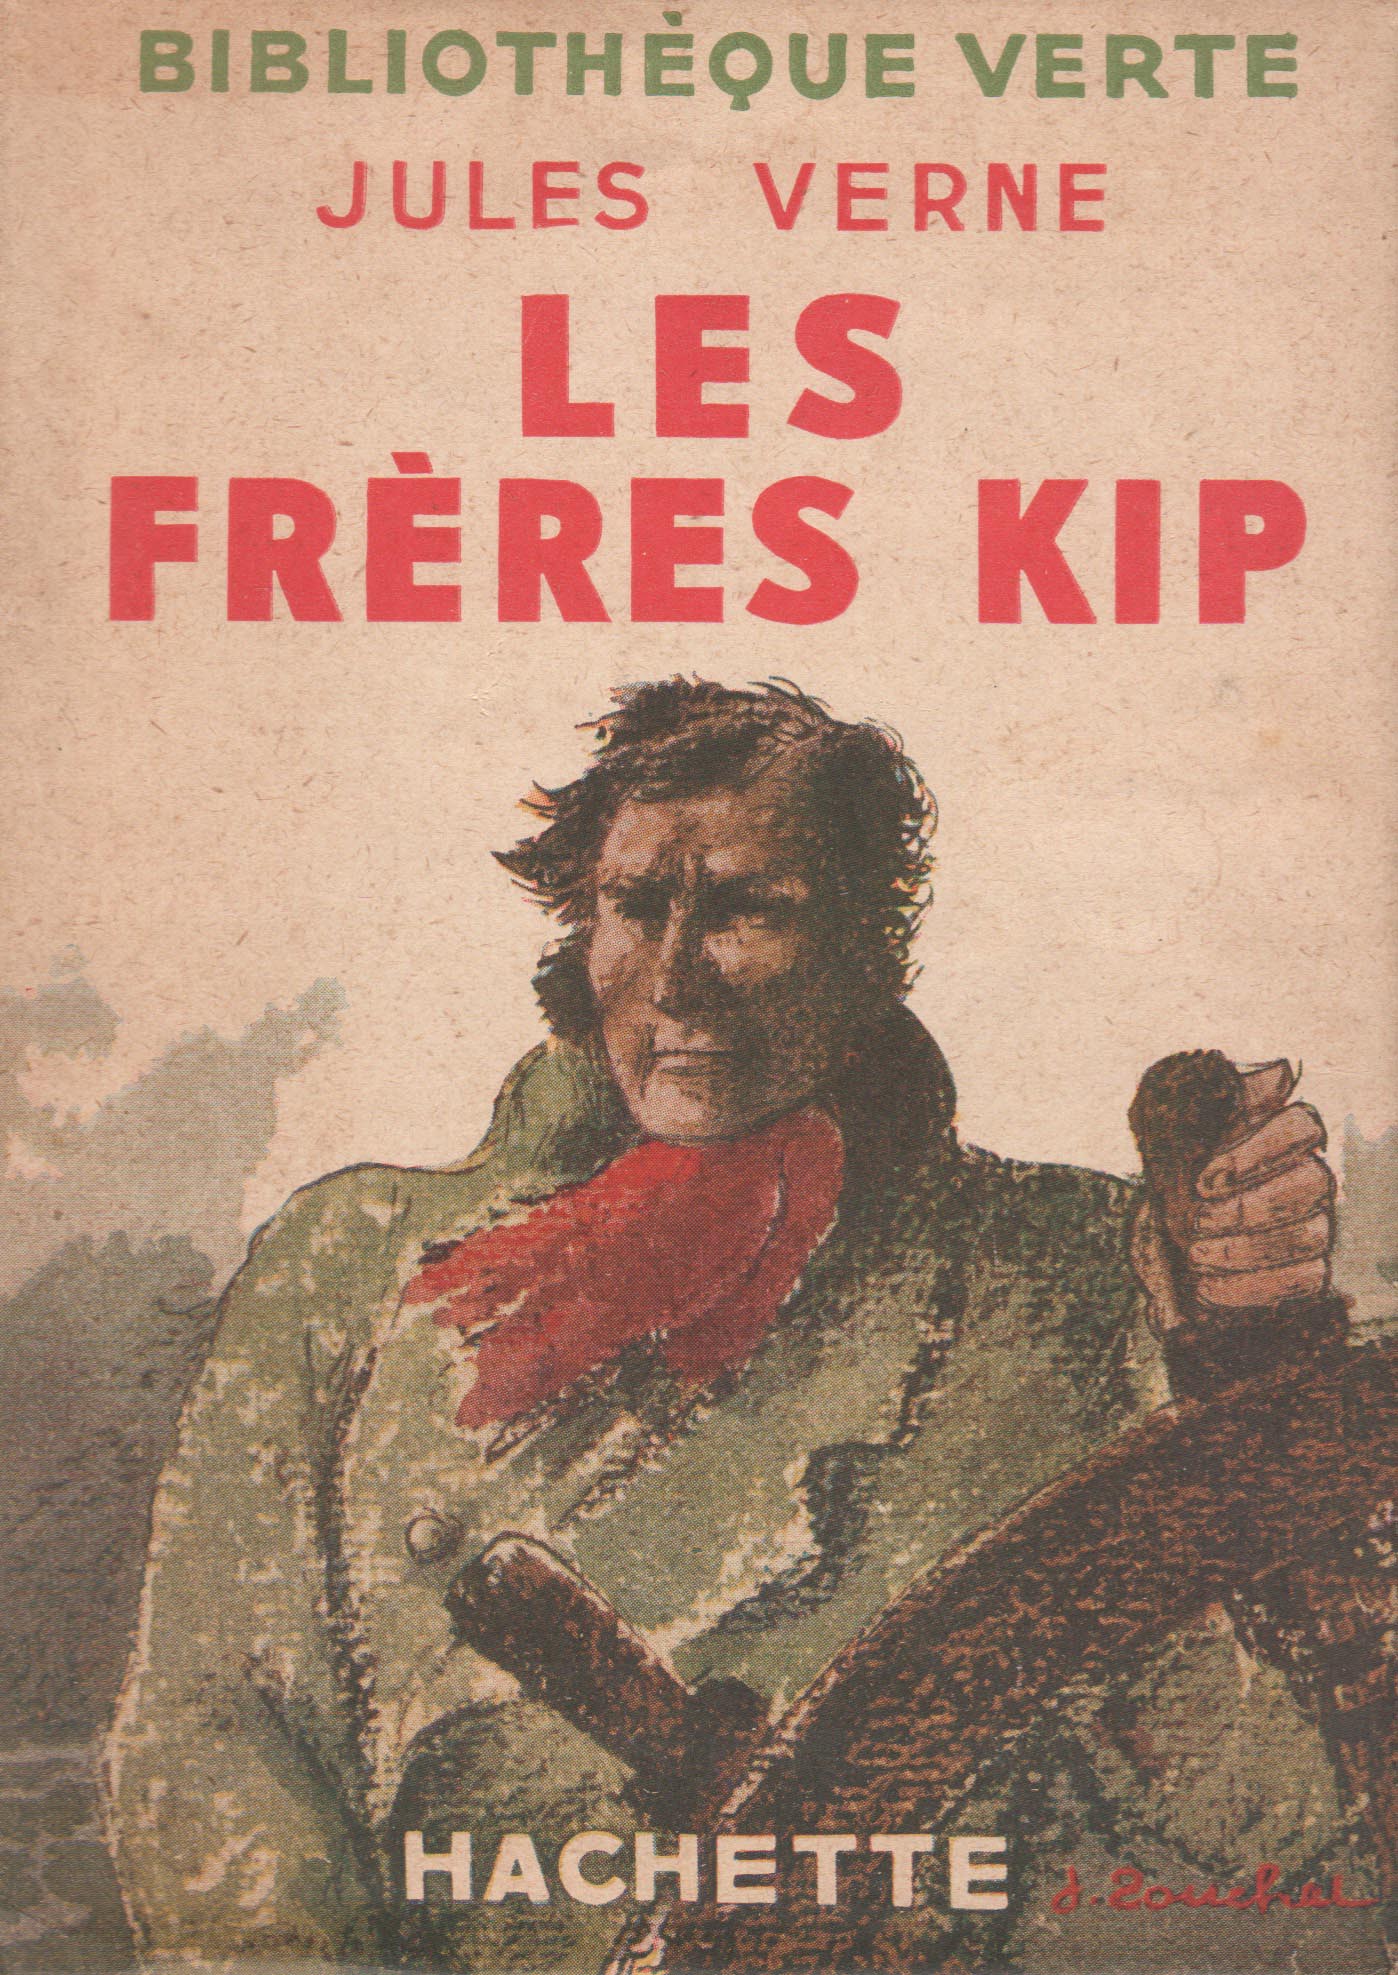 Les frères Kip (Jules Verne)